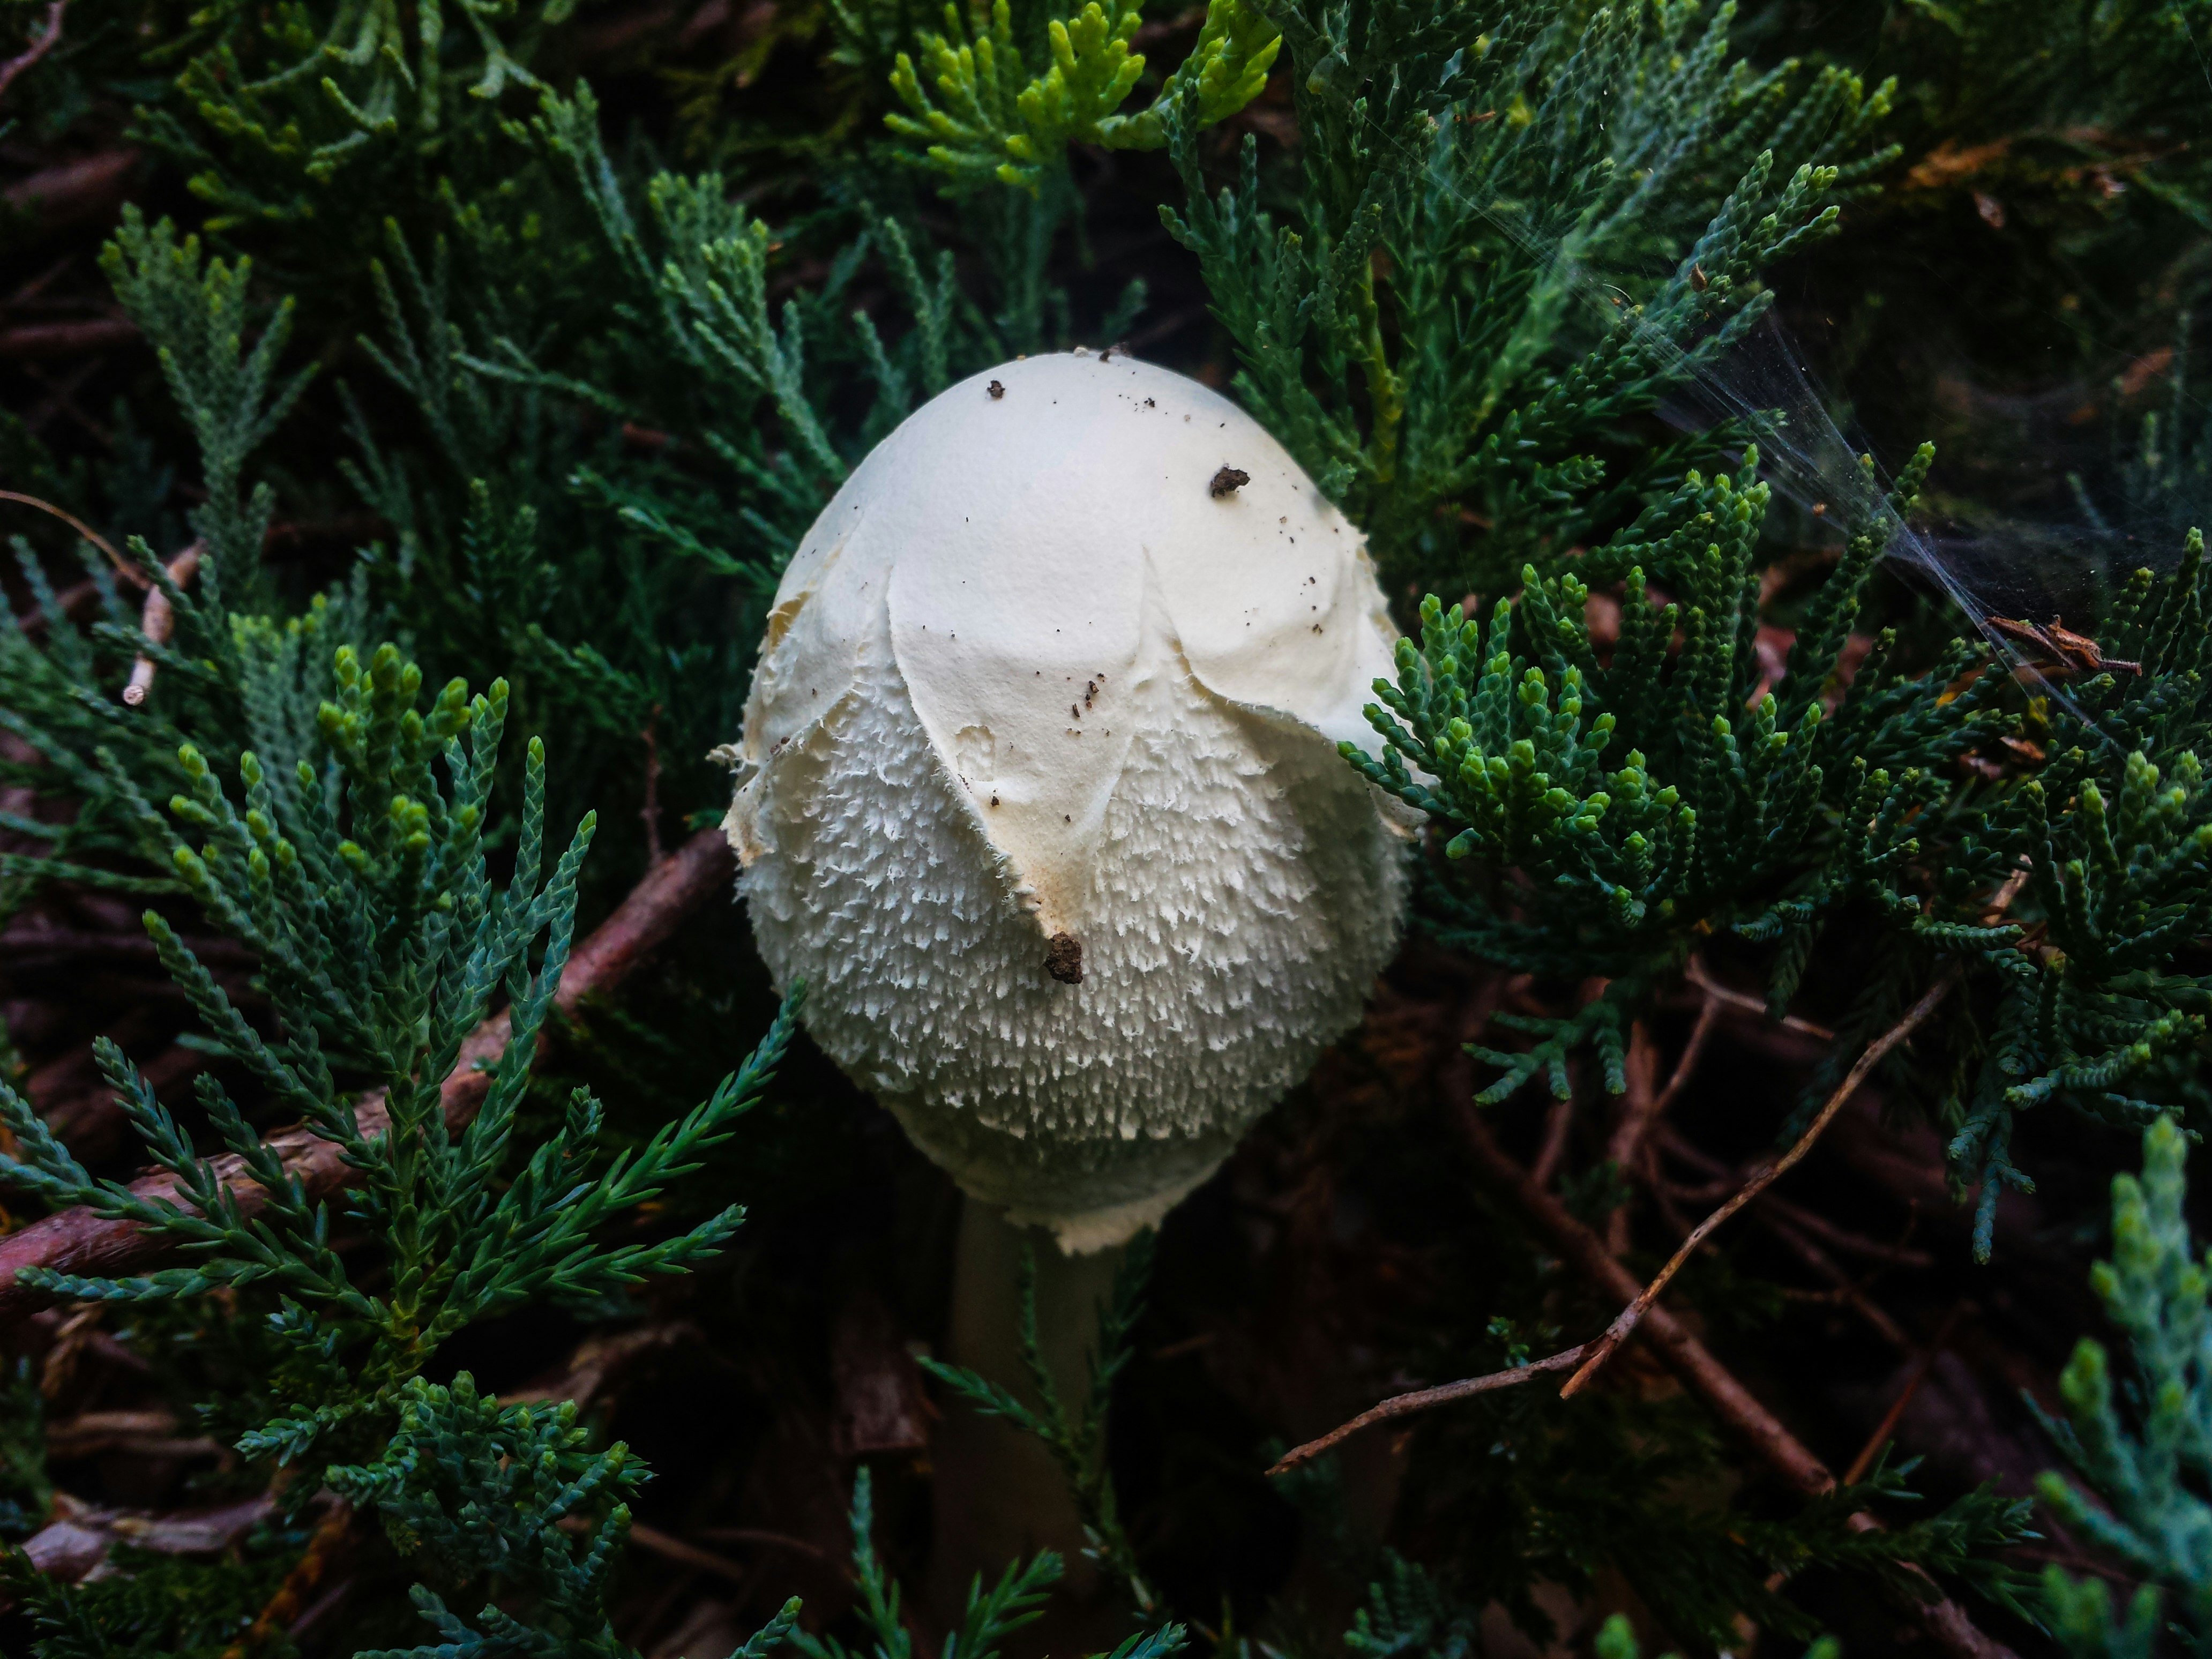 white mushroom in middle of pine tree leaves